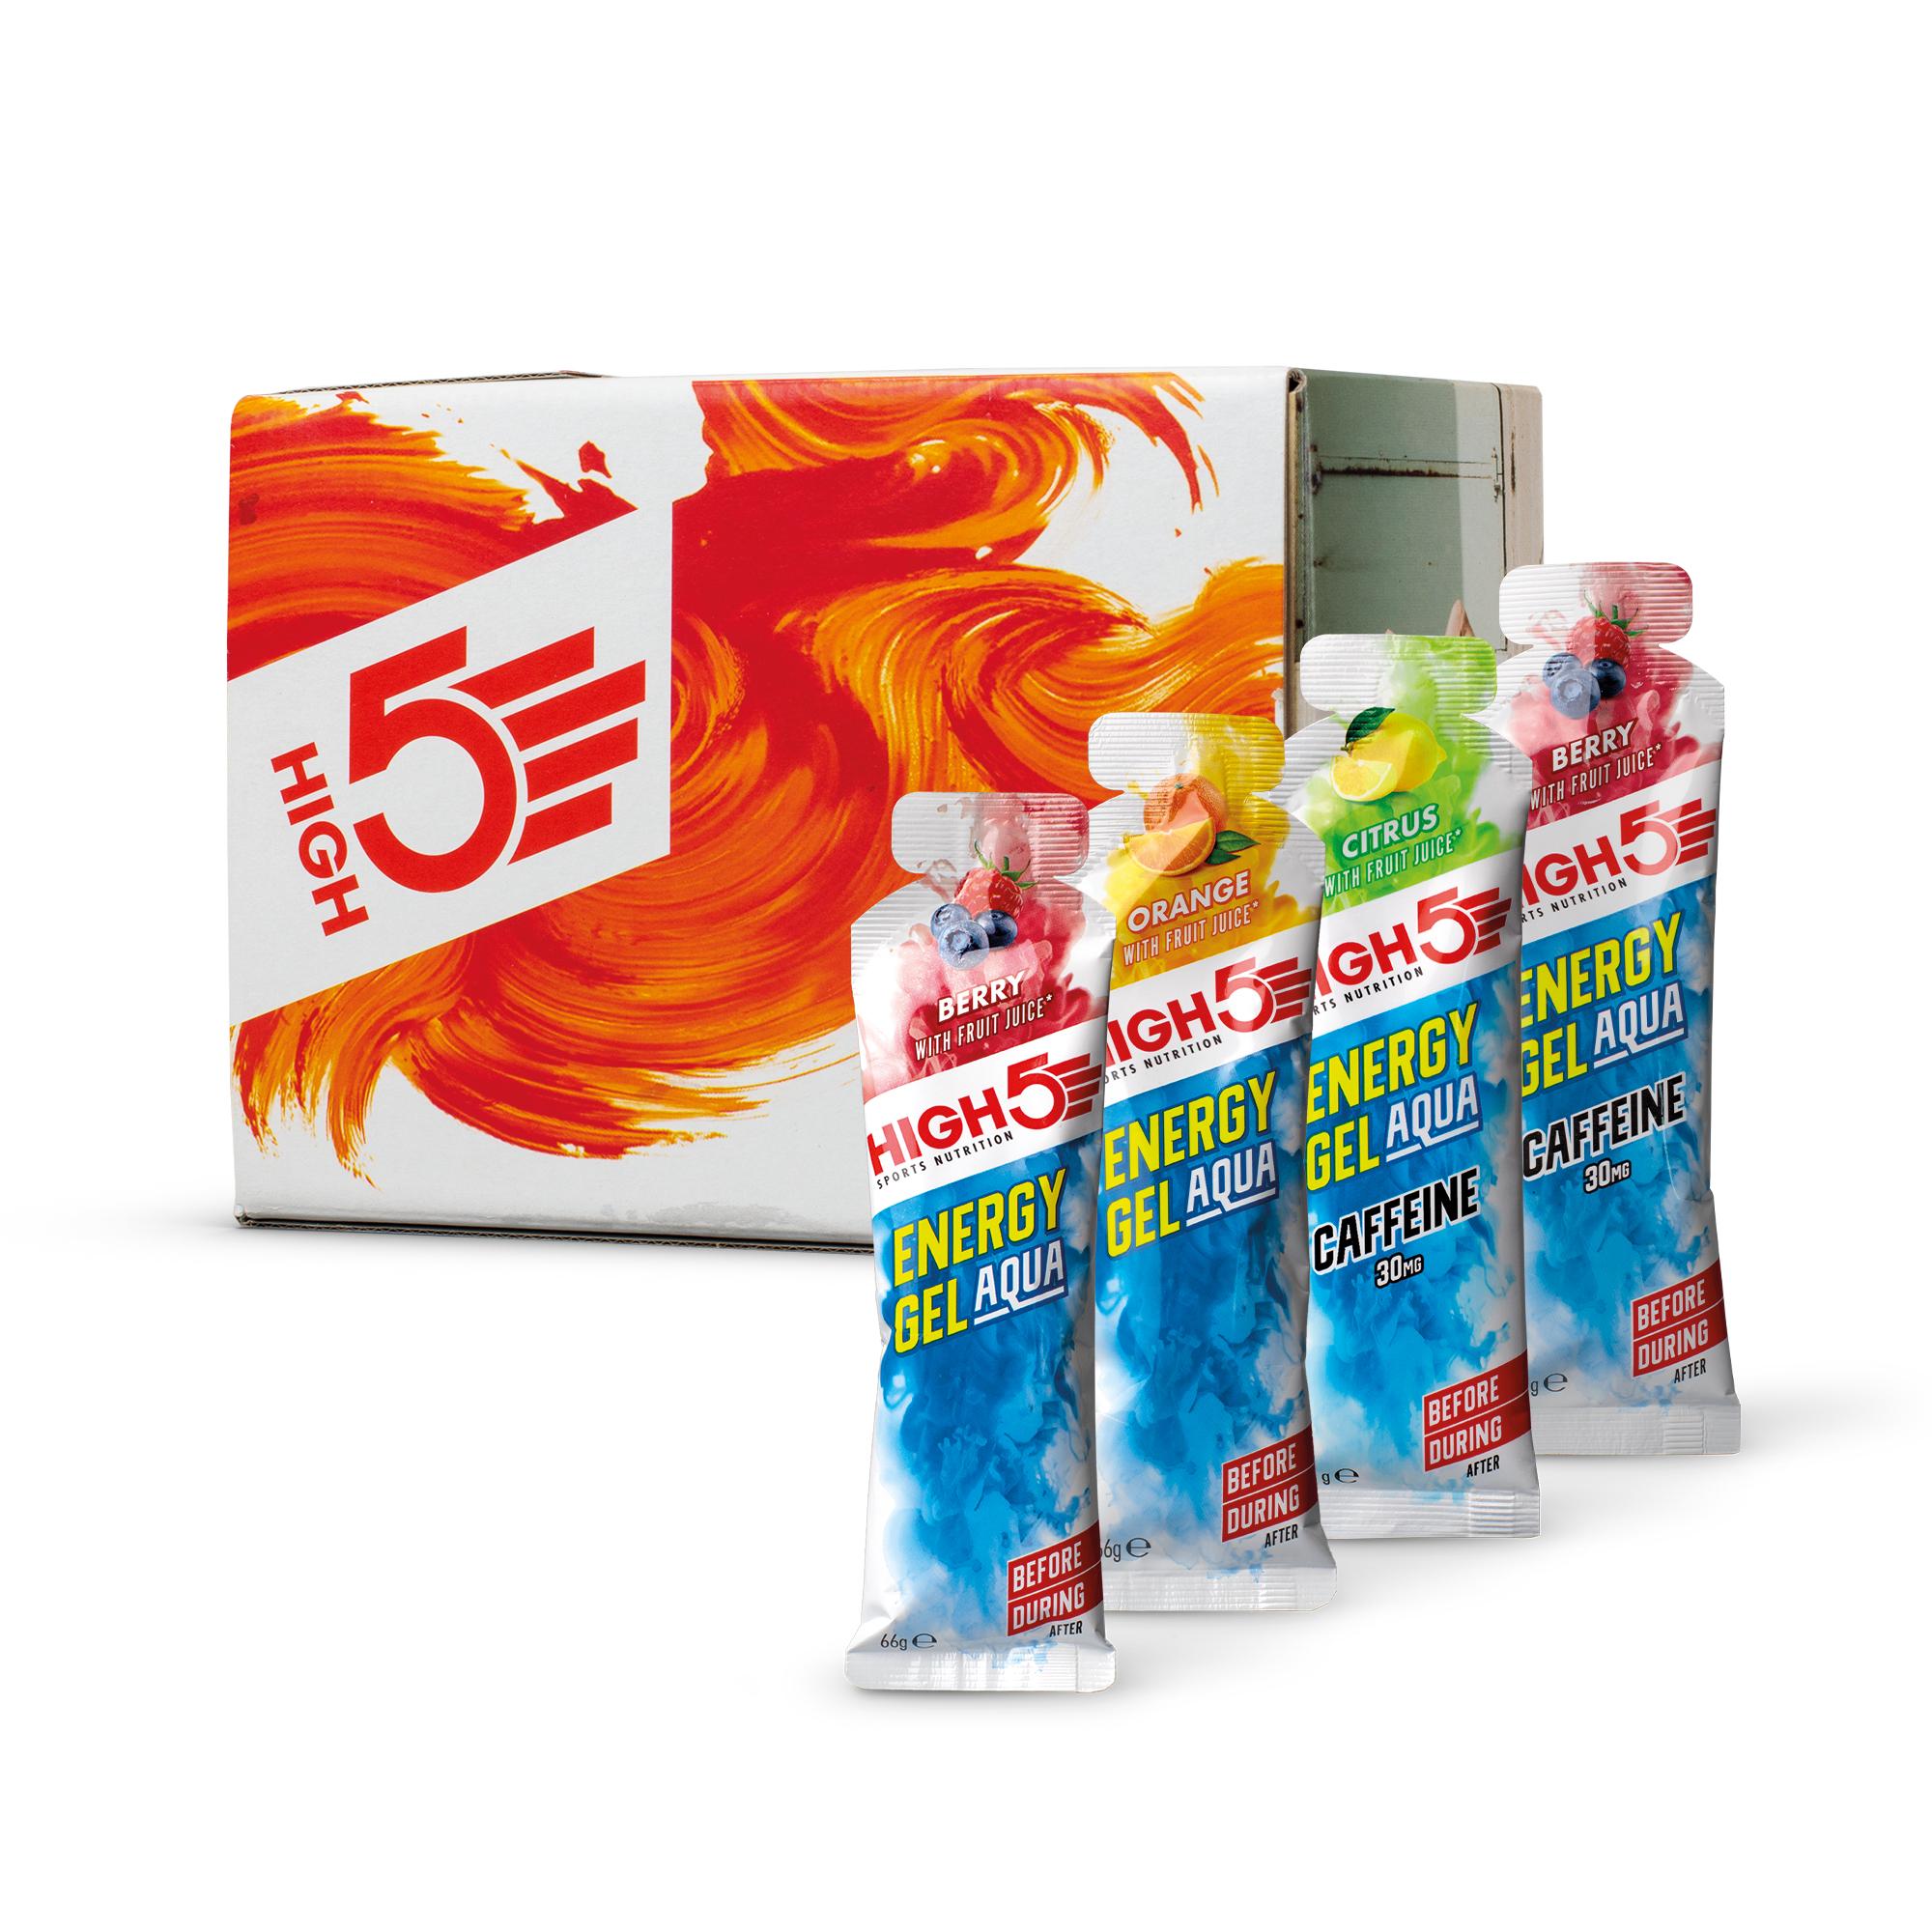 High5 Energy Gel Aqua Mixed Flavour Pack (15 X 66g)